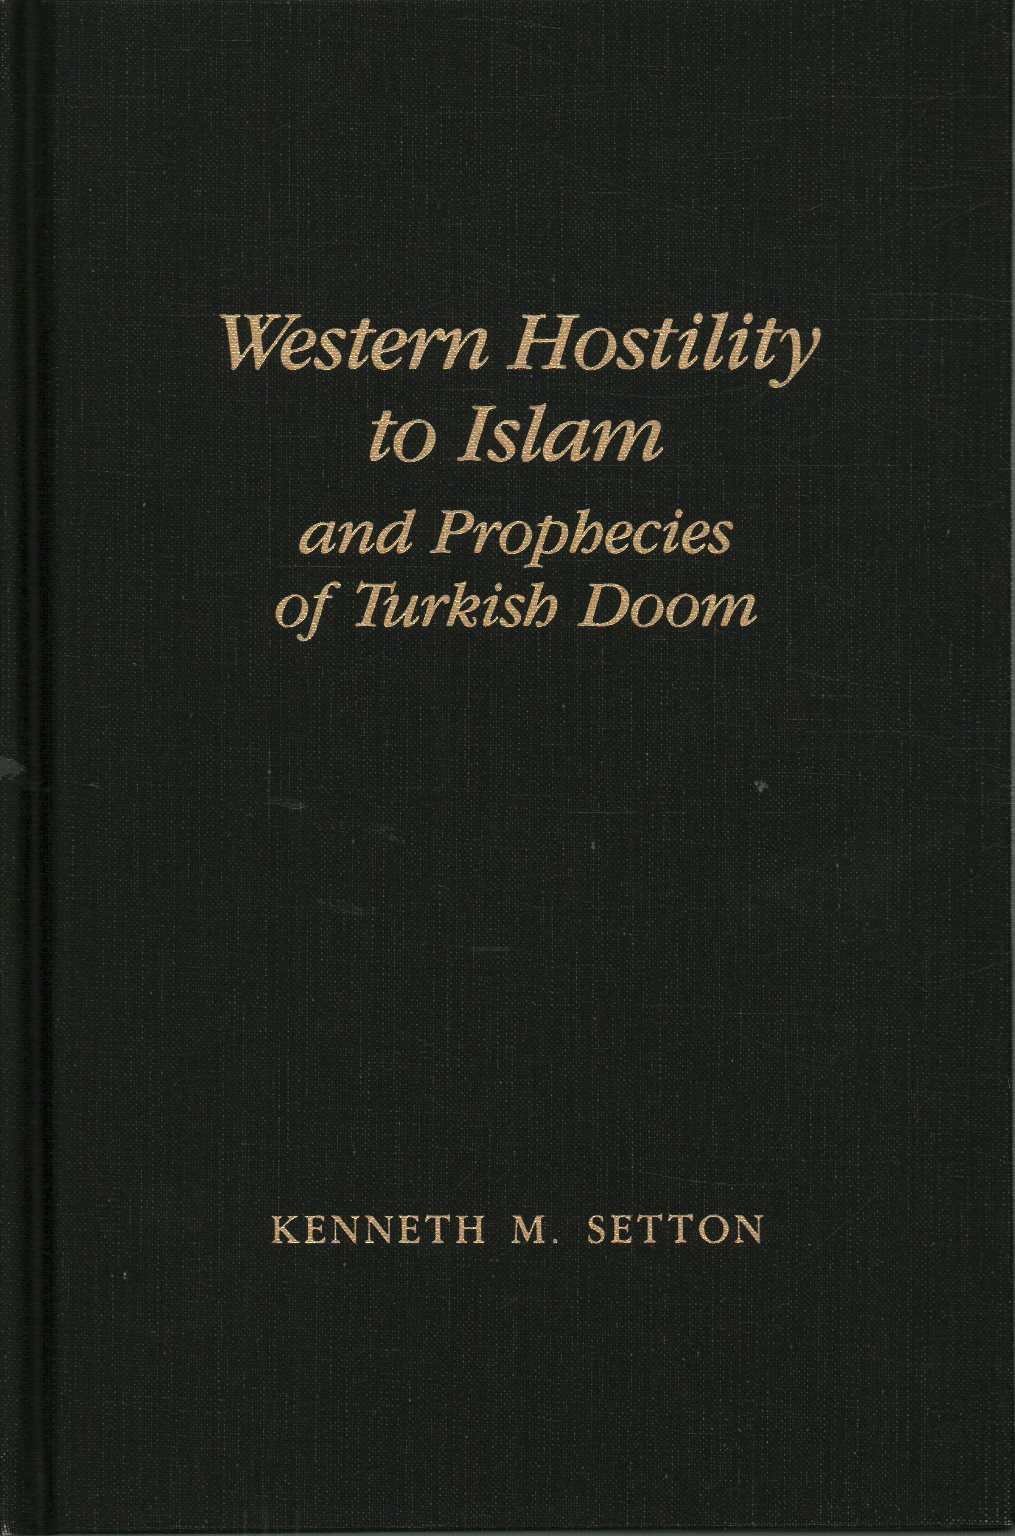 Western Hostility to Islam and prophecies of Turki, Kenneth M. Setton